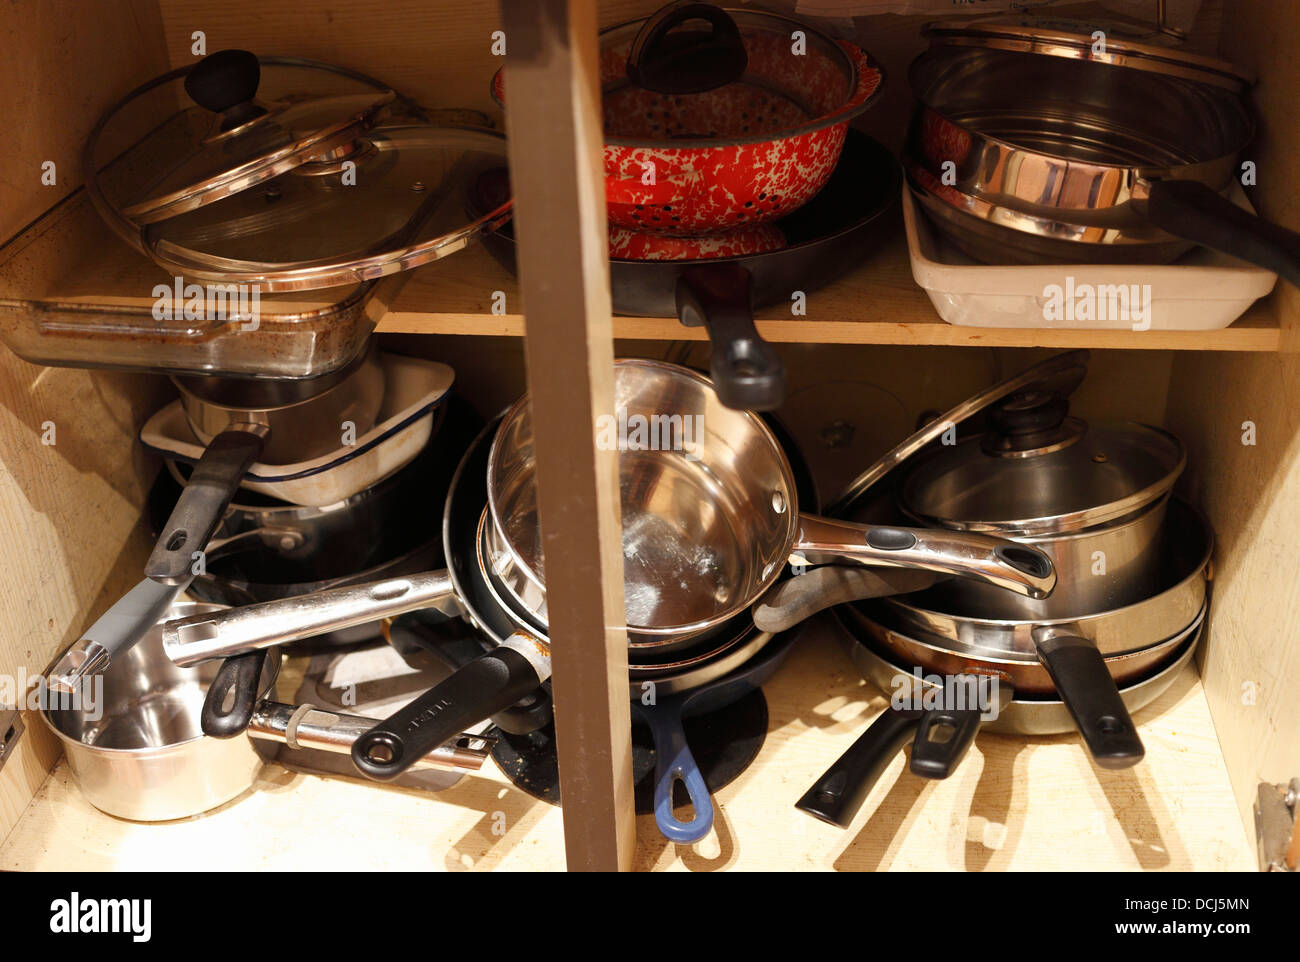 Saucepans in a jumbled kitchen cupbaord. Stock Photo